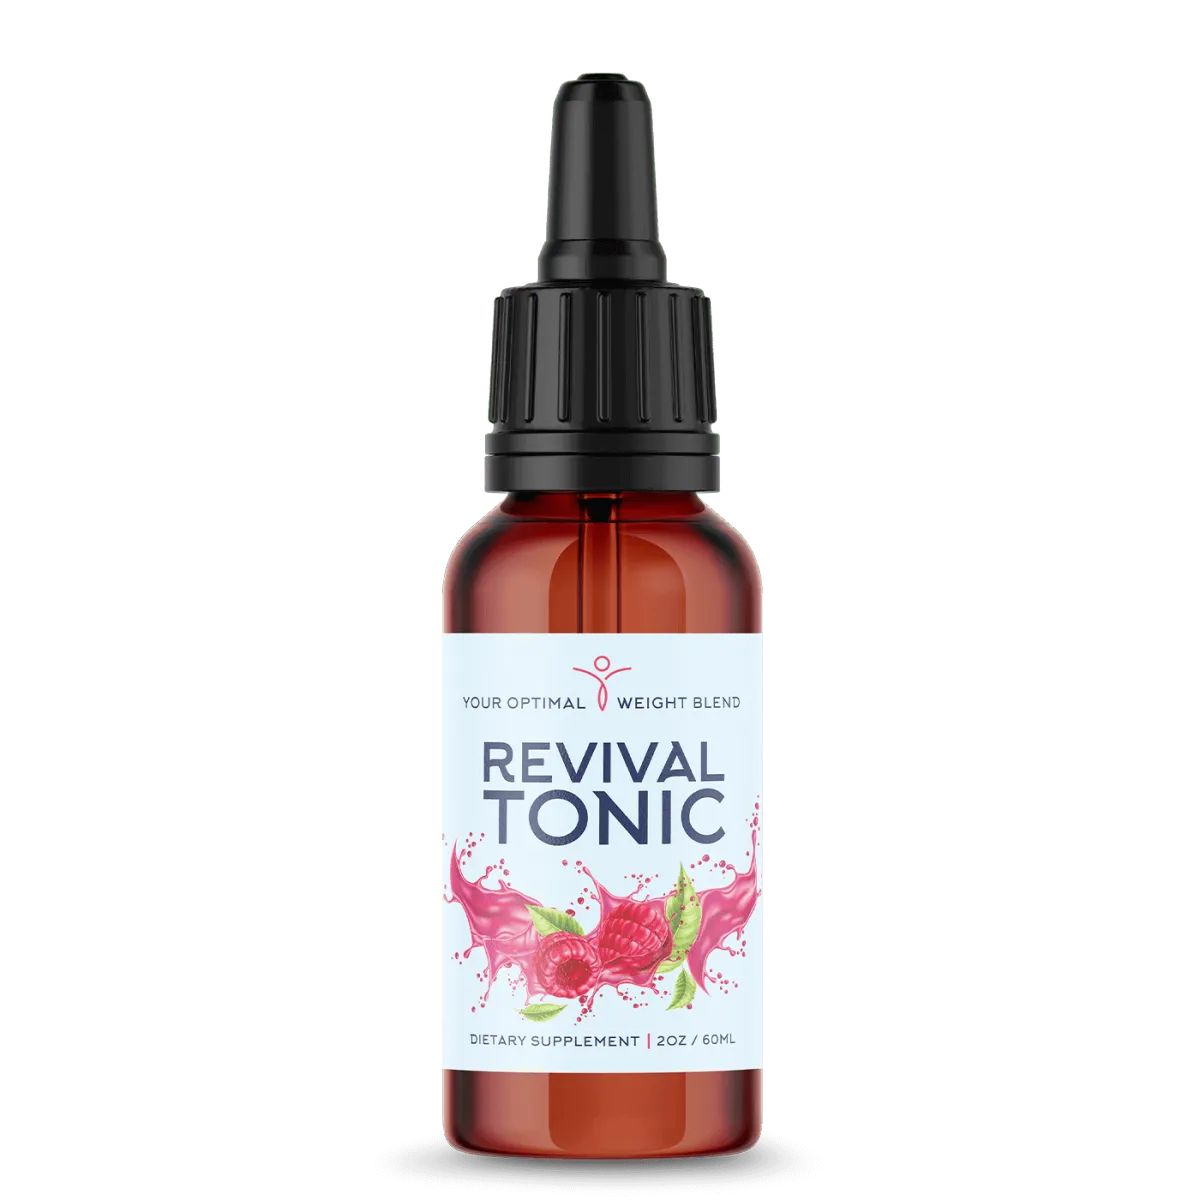 Buy Revival Tonic 1 bottle